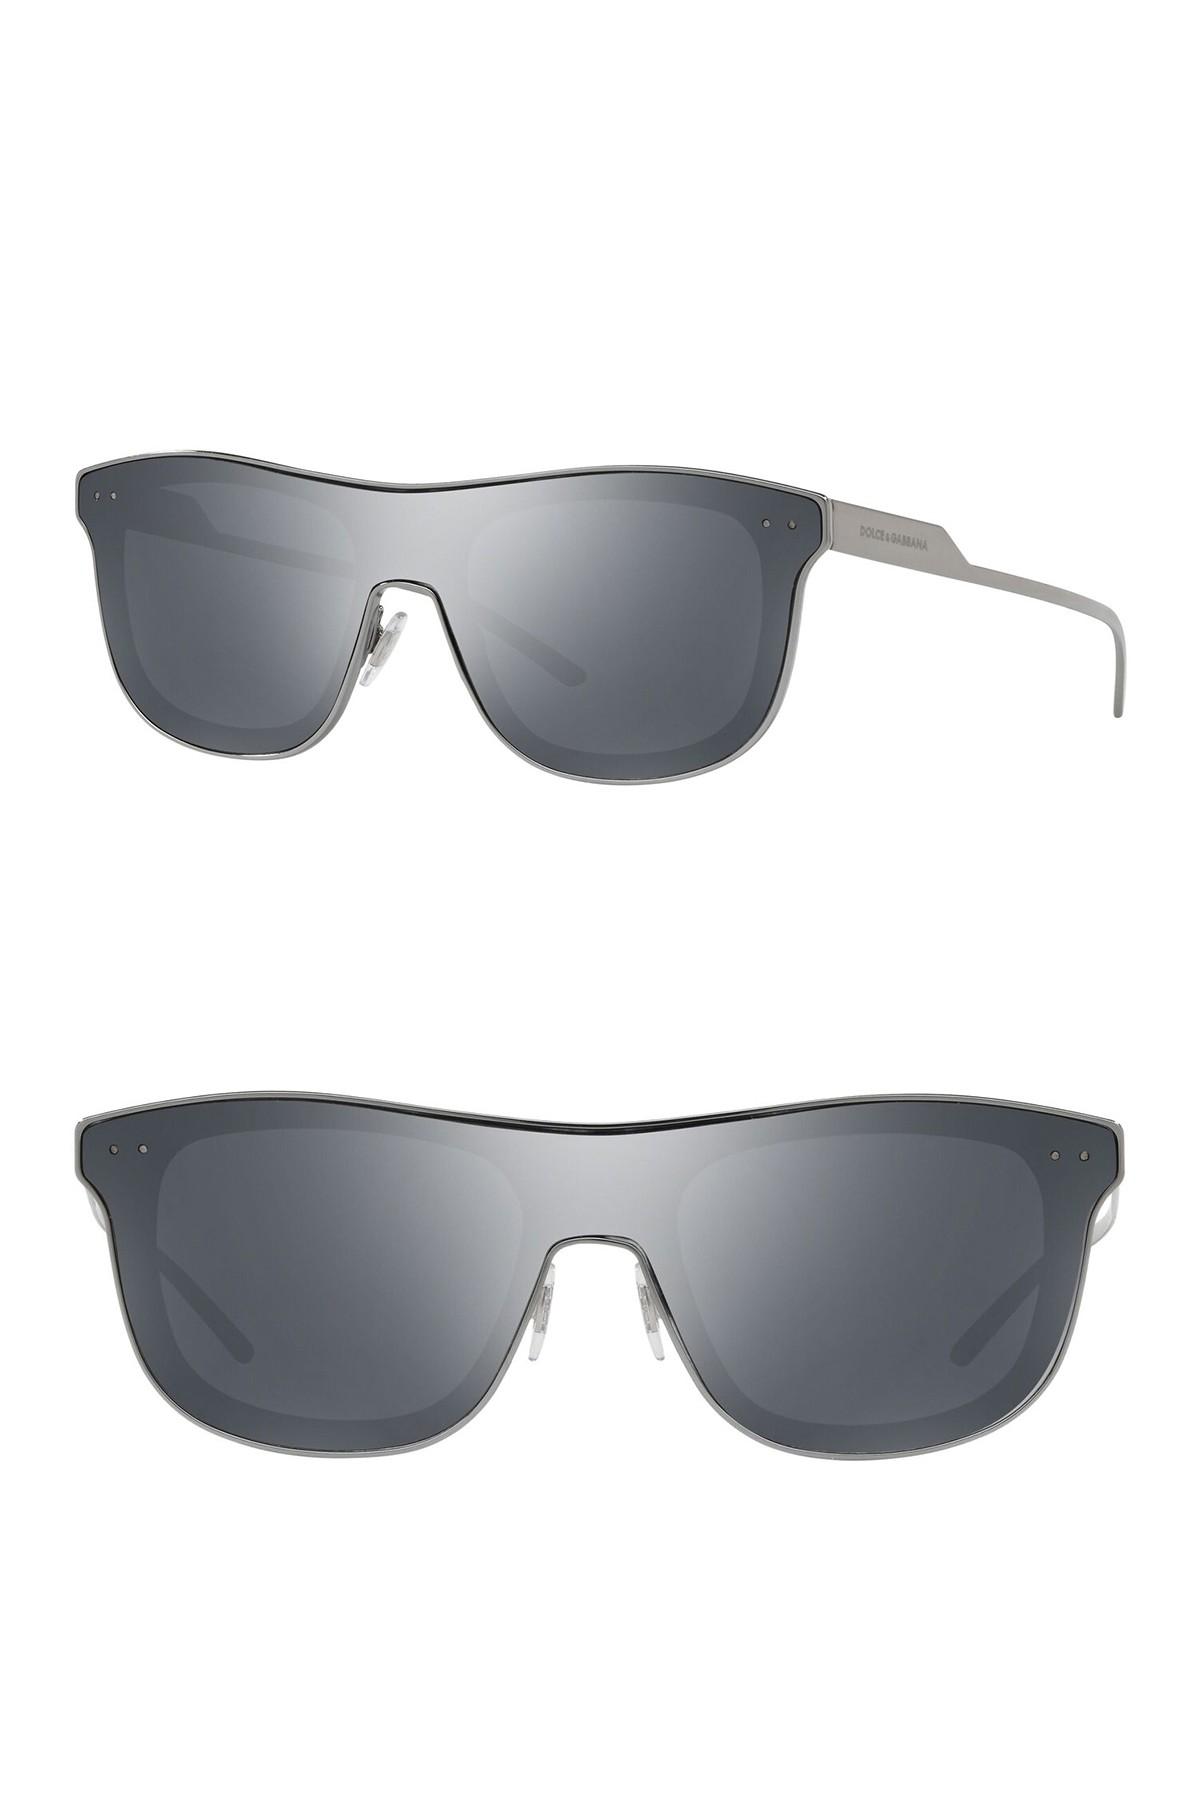 dolce and gabbana shield sunglasses